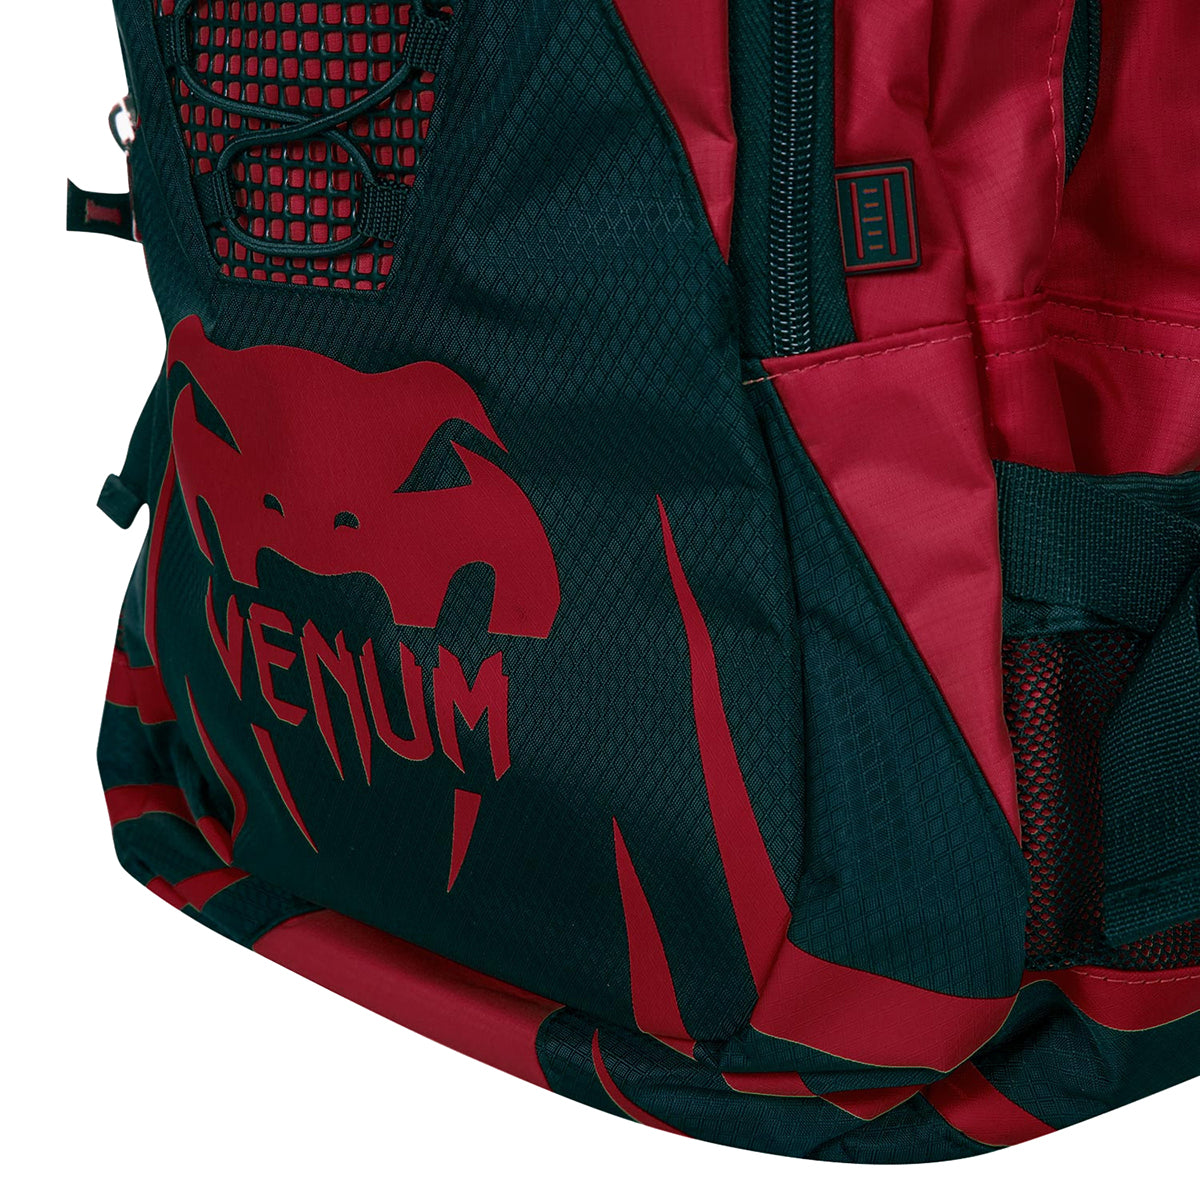 Venum Challenger Pro Backpack - Red Venum